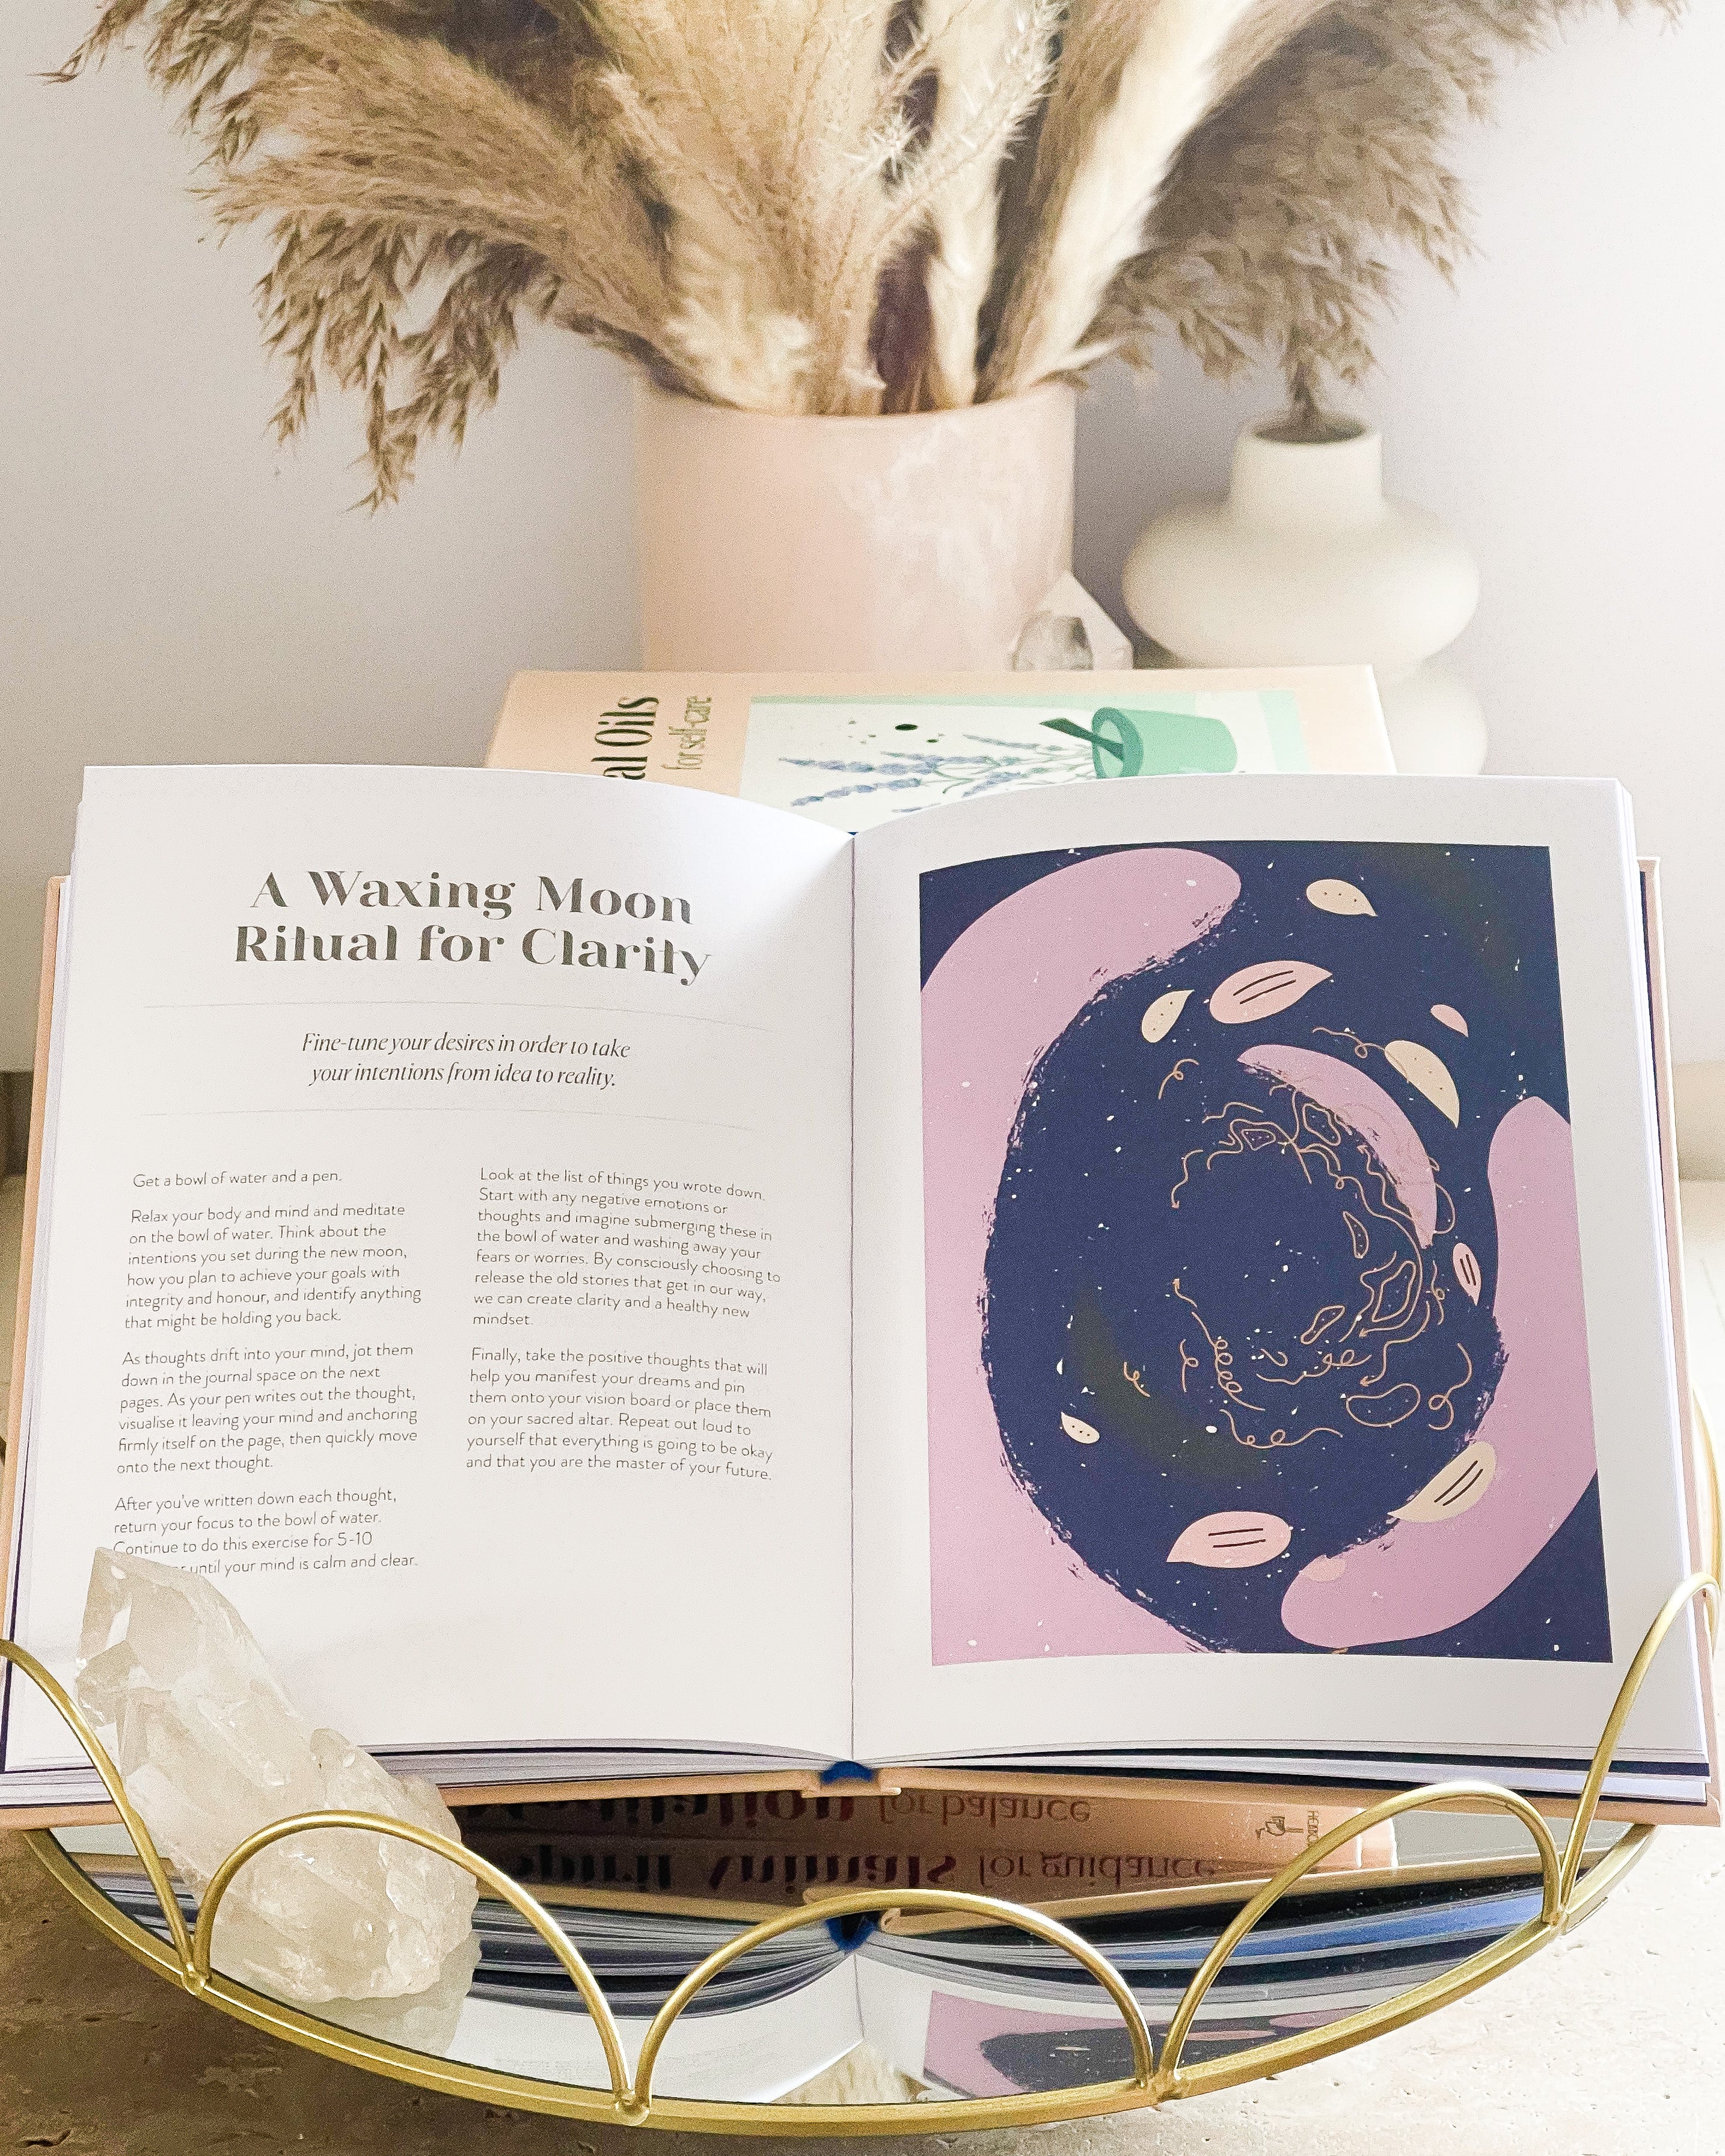 Moon Magic For Higher Wisdom // Book